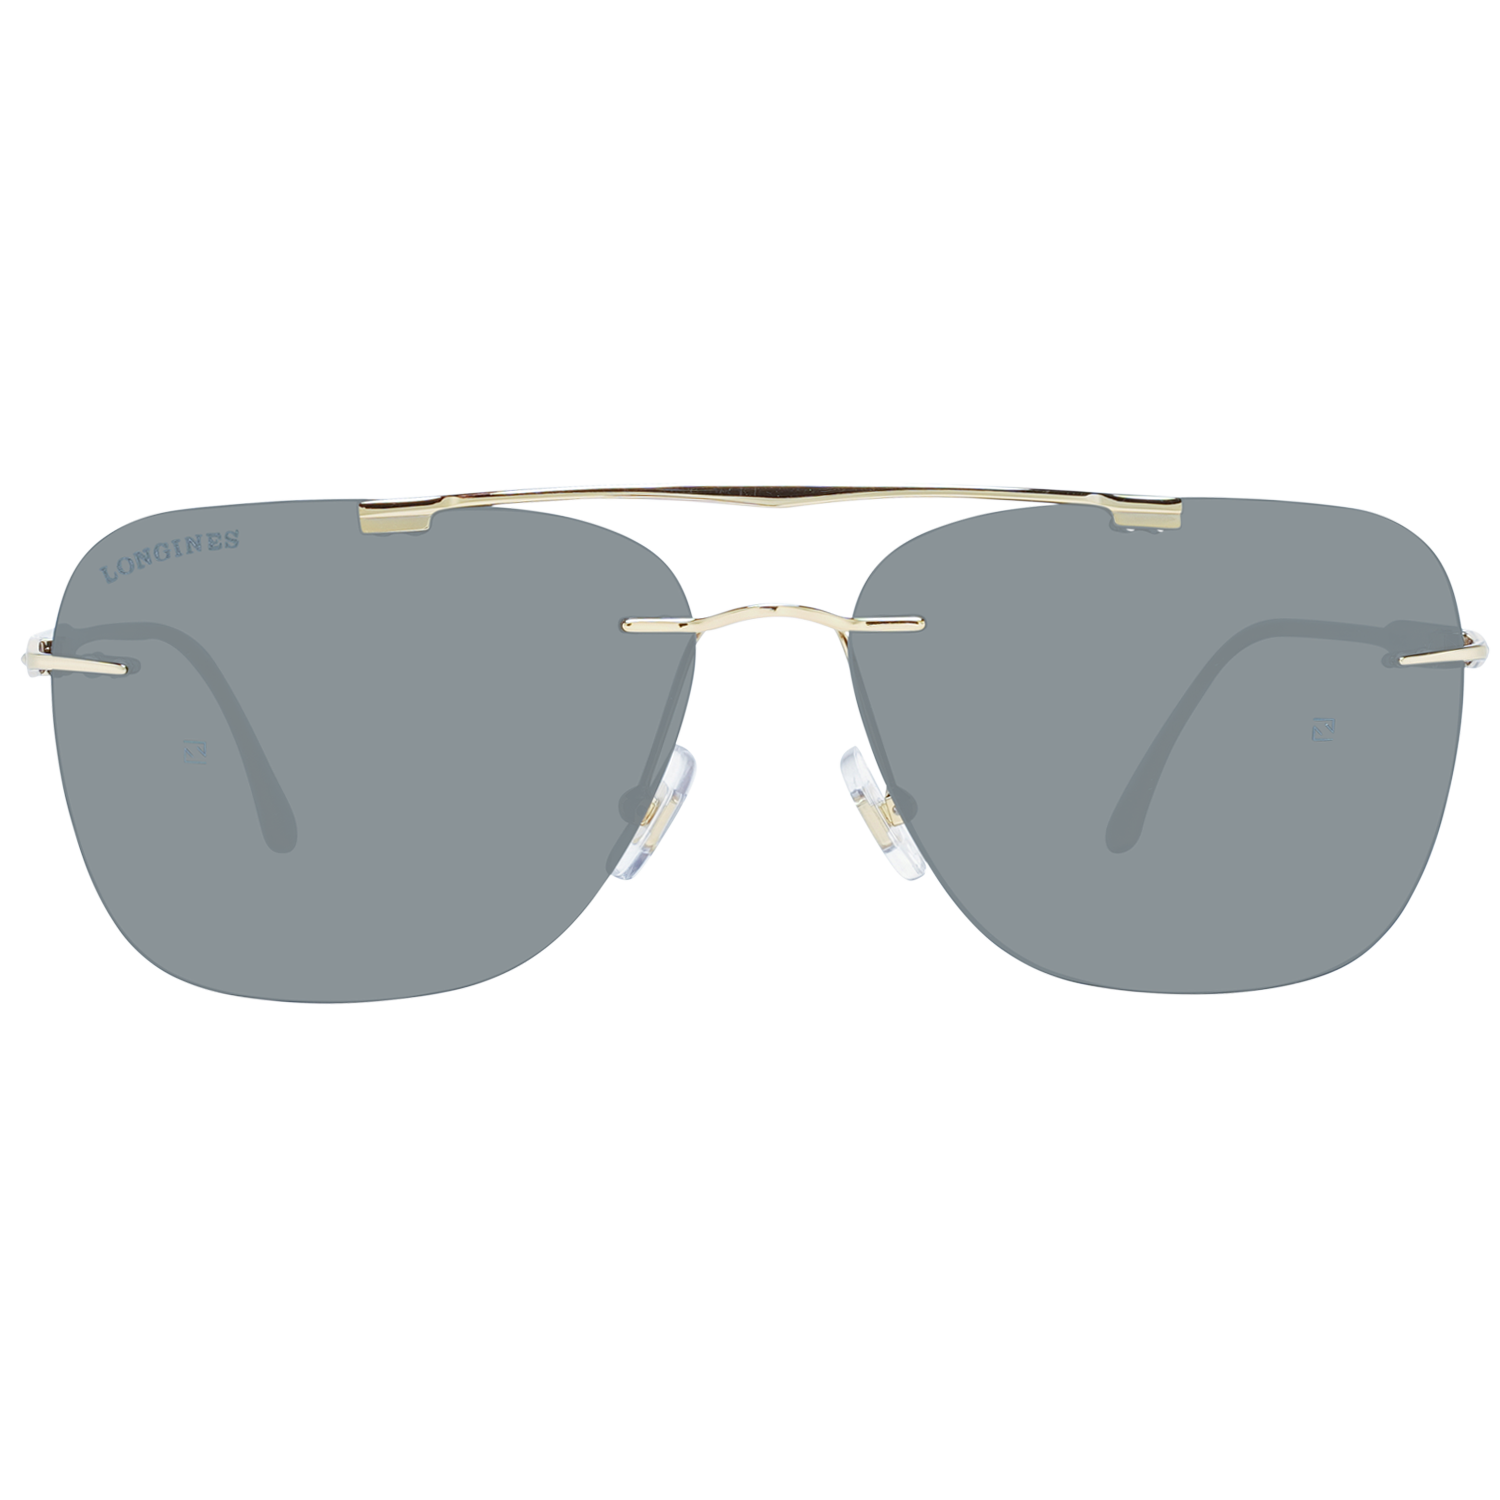 Longines Sunglasses Longines Sunglasses LG0009-H 30A 62mm Eyeglasses Eyewear UK USA Australia 